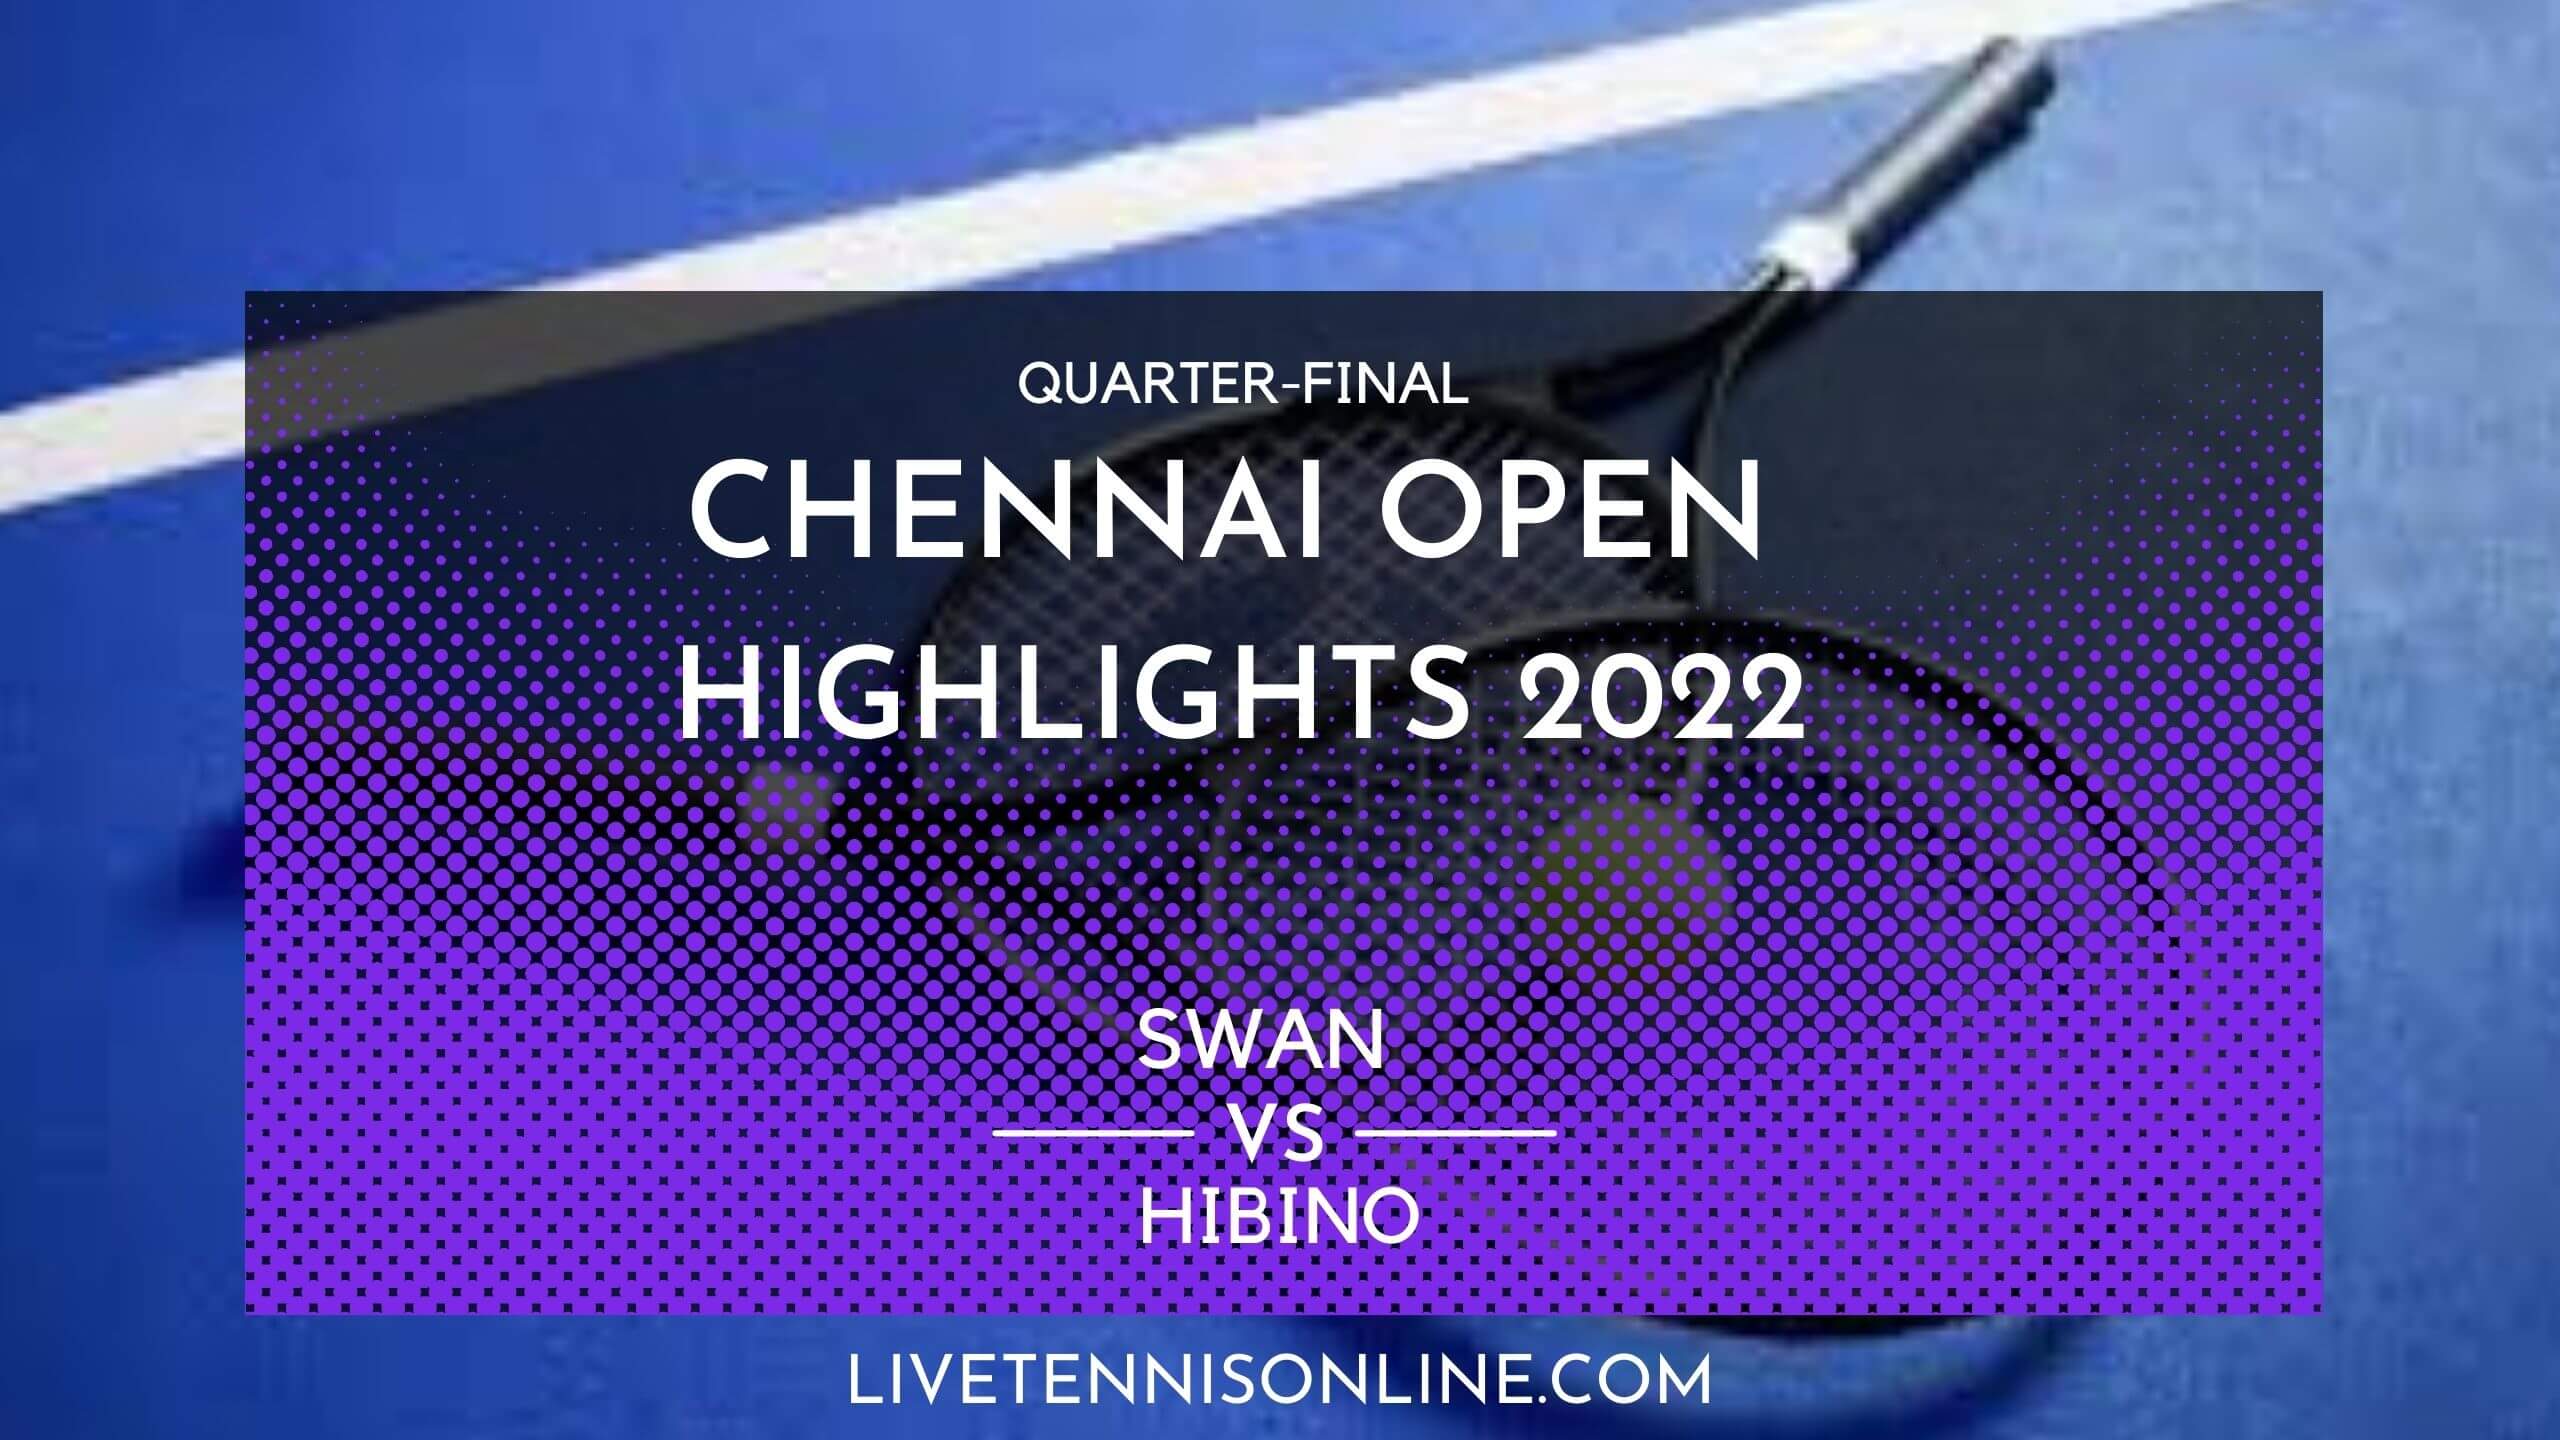 Swan Vs Hibino QF Highlights 2022 Chennai Open